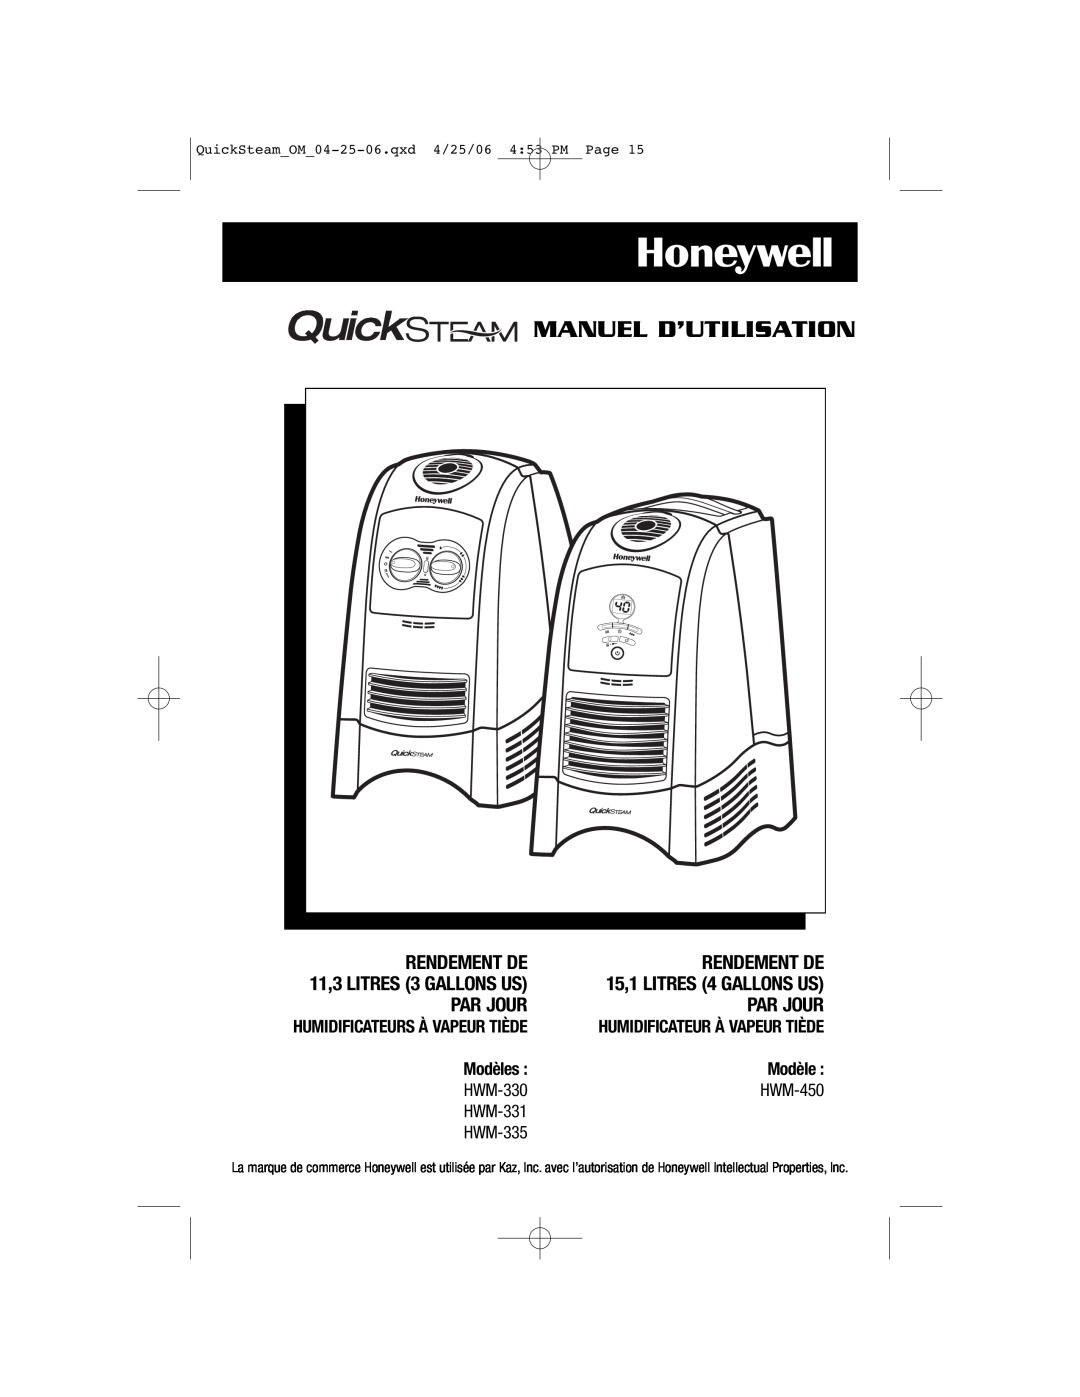 Honeywell HWM-331 owner manual Manuel D’Utilisation, Rendement De, Par Jour, Modèles, HWM-330, HWM-450, HWM-335 